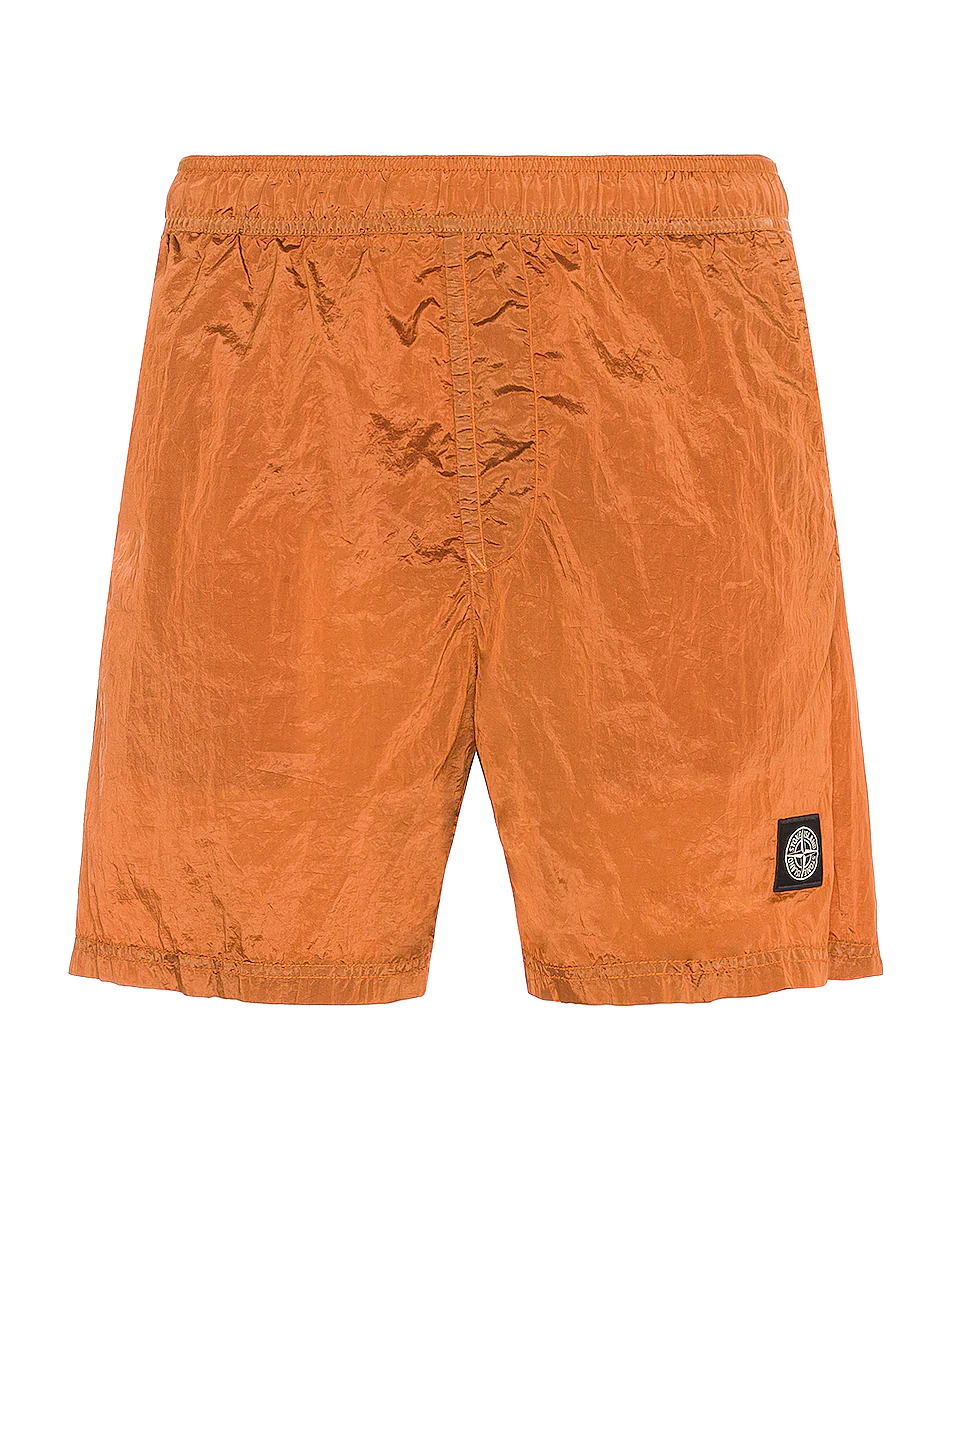 Stone Island Metal Swim Shorts Orange